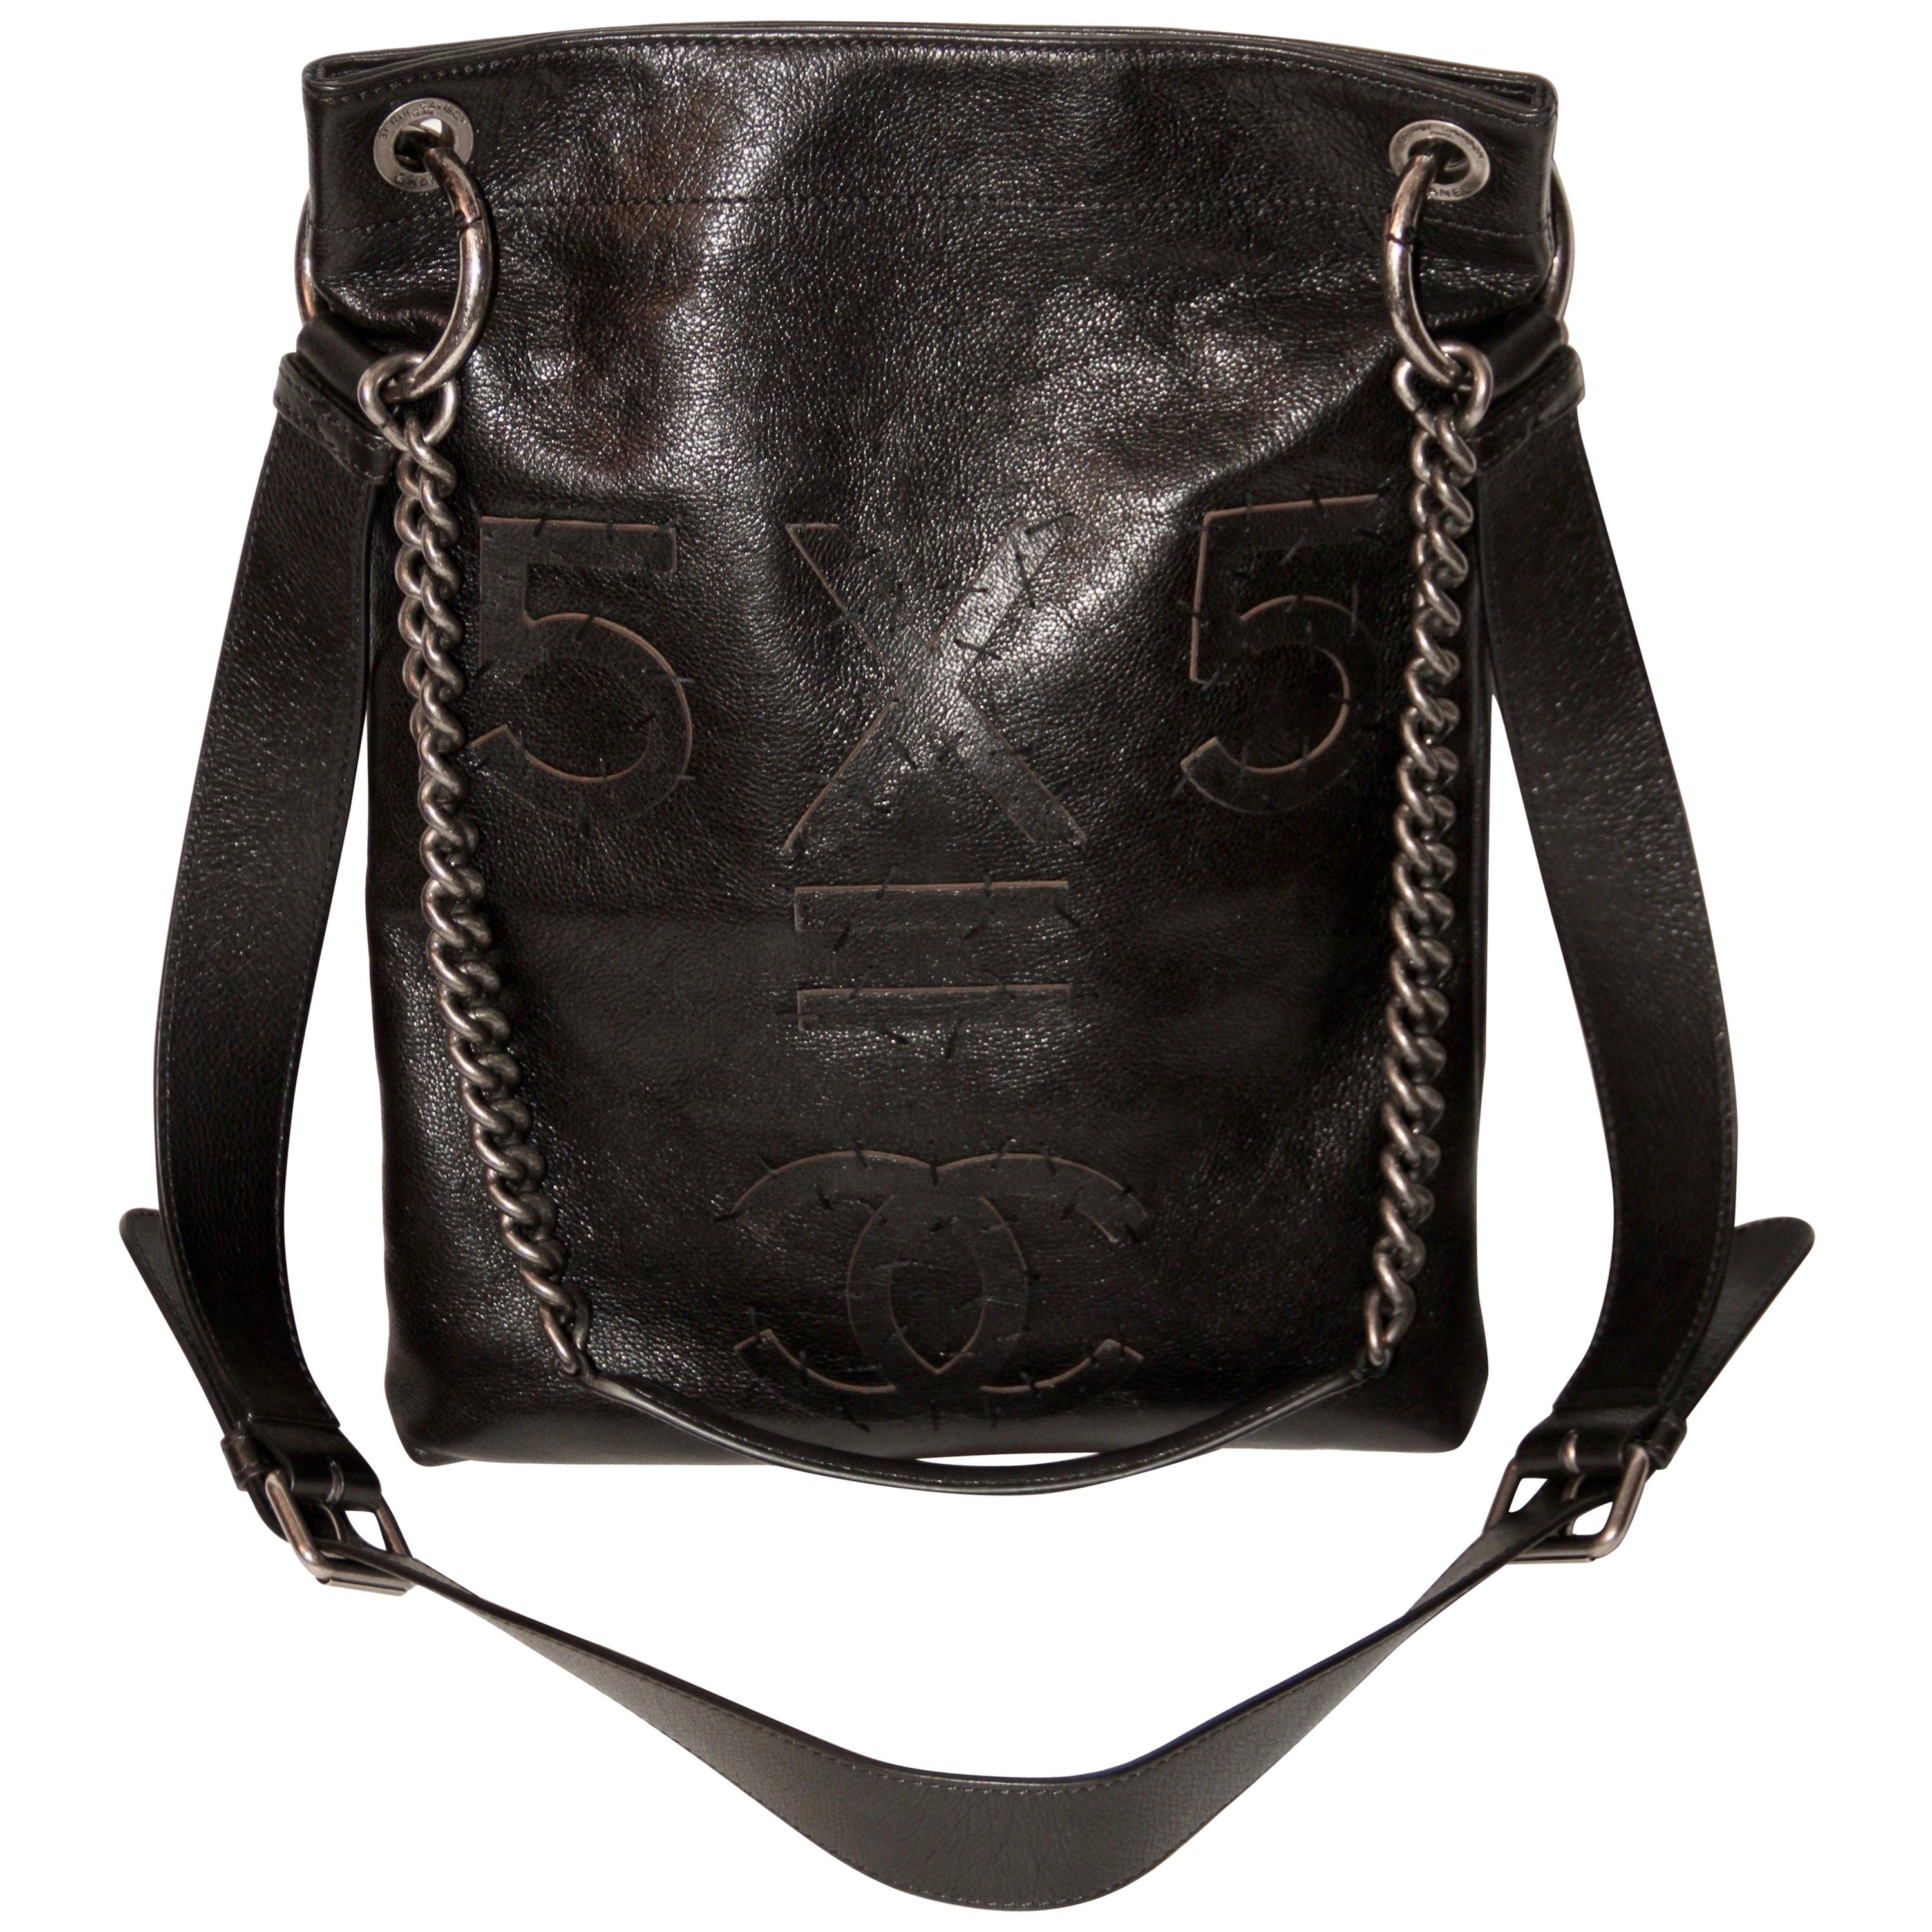 Chanel 5 x 5 CC Black Smooth Leather Satchel Bag